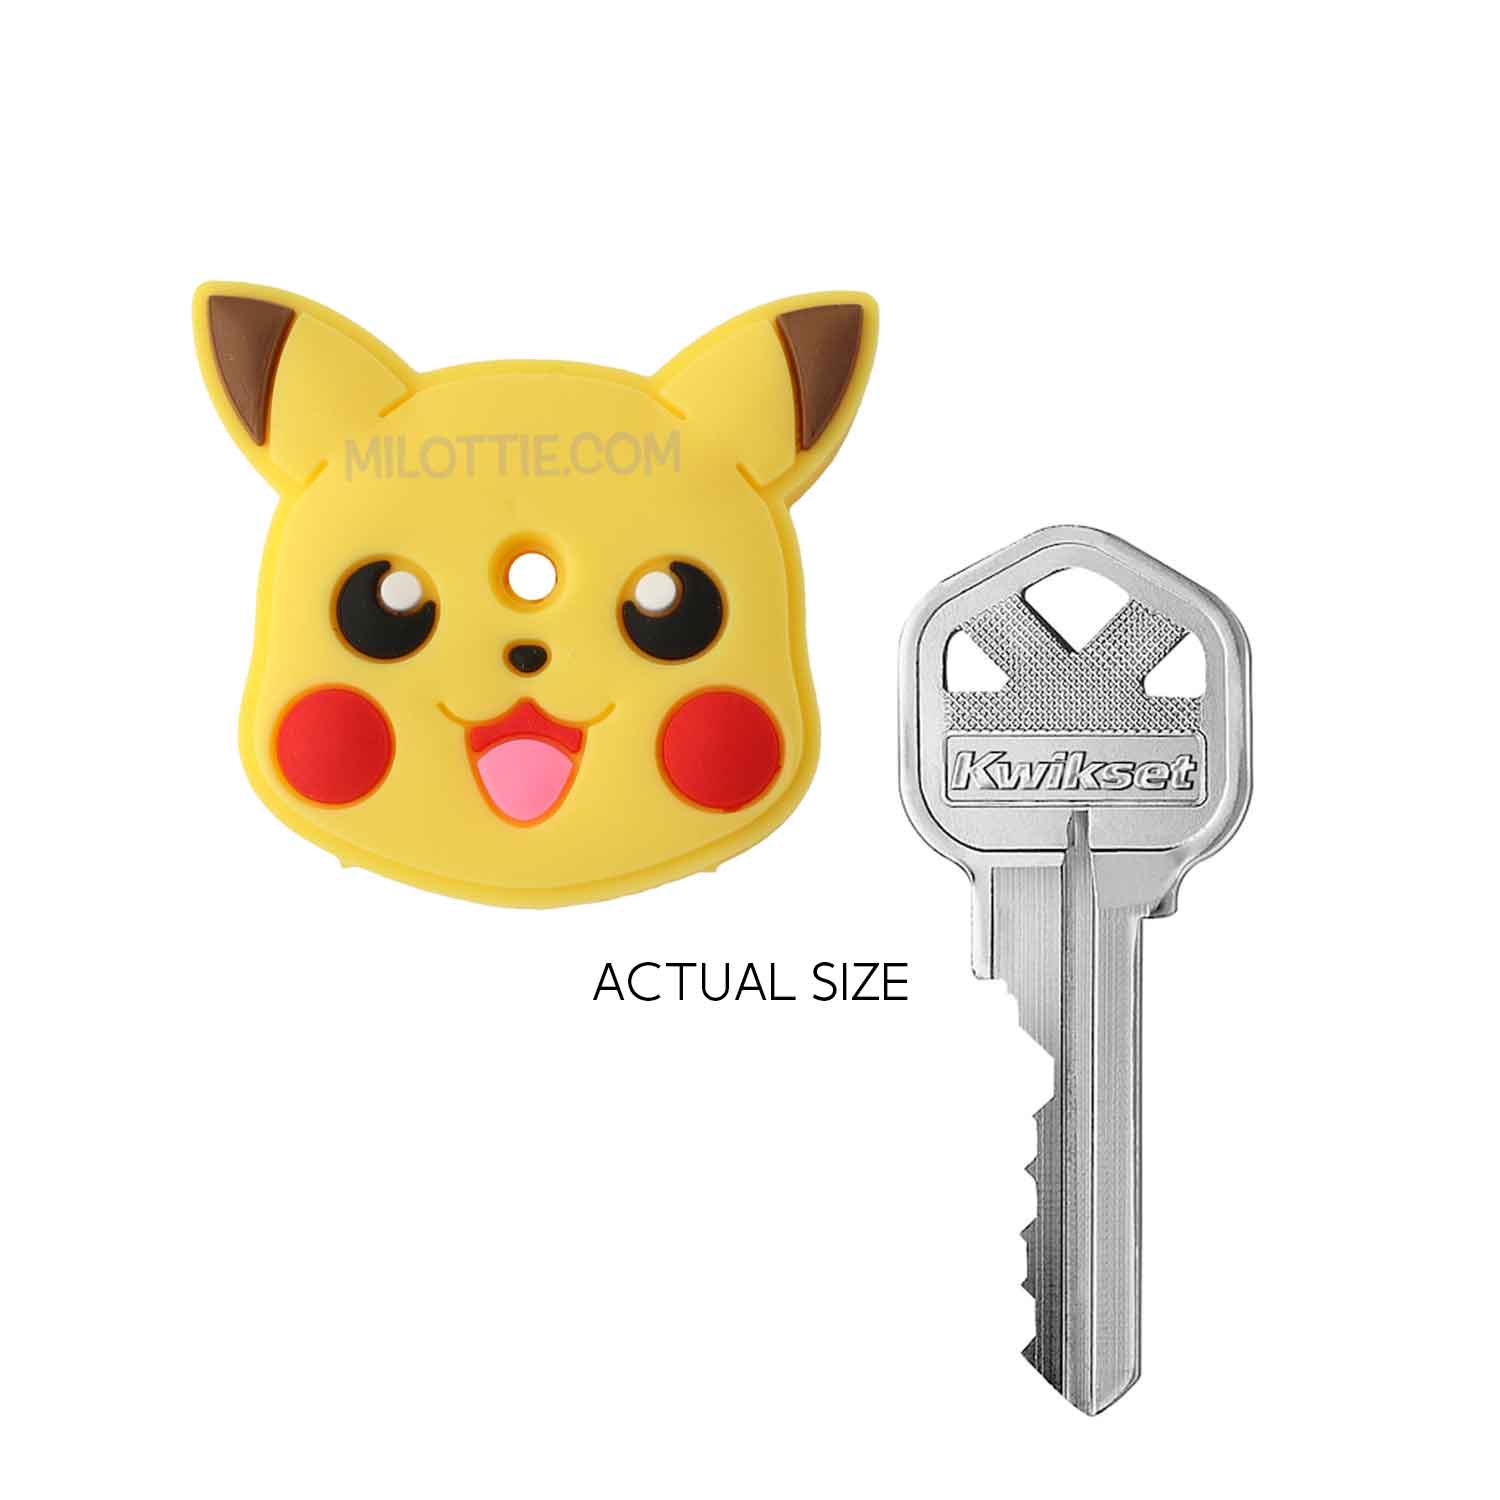 Pikachu key cap - Milottie